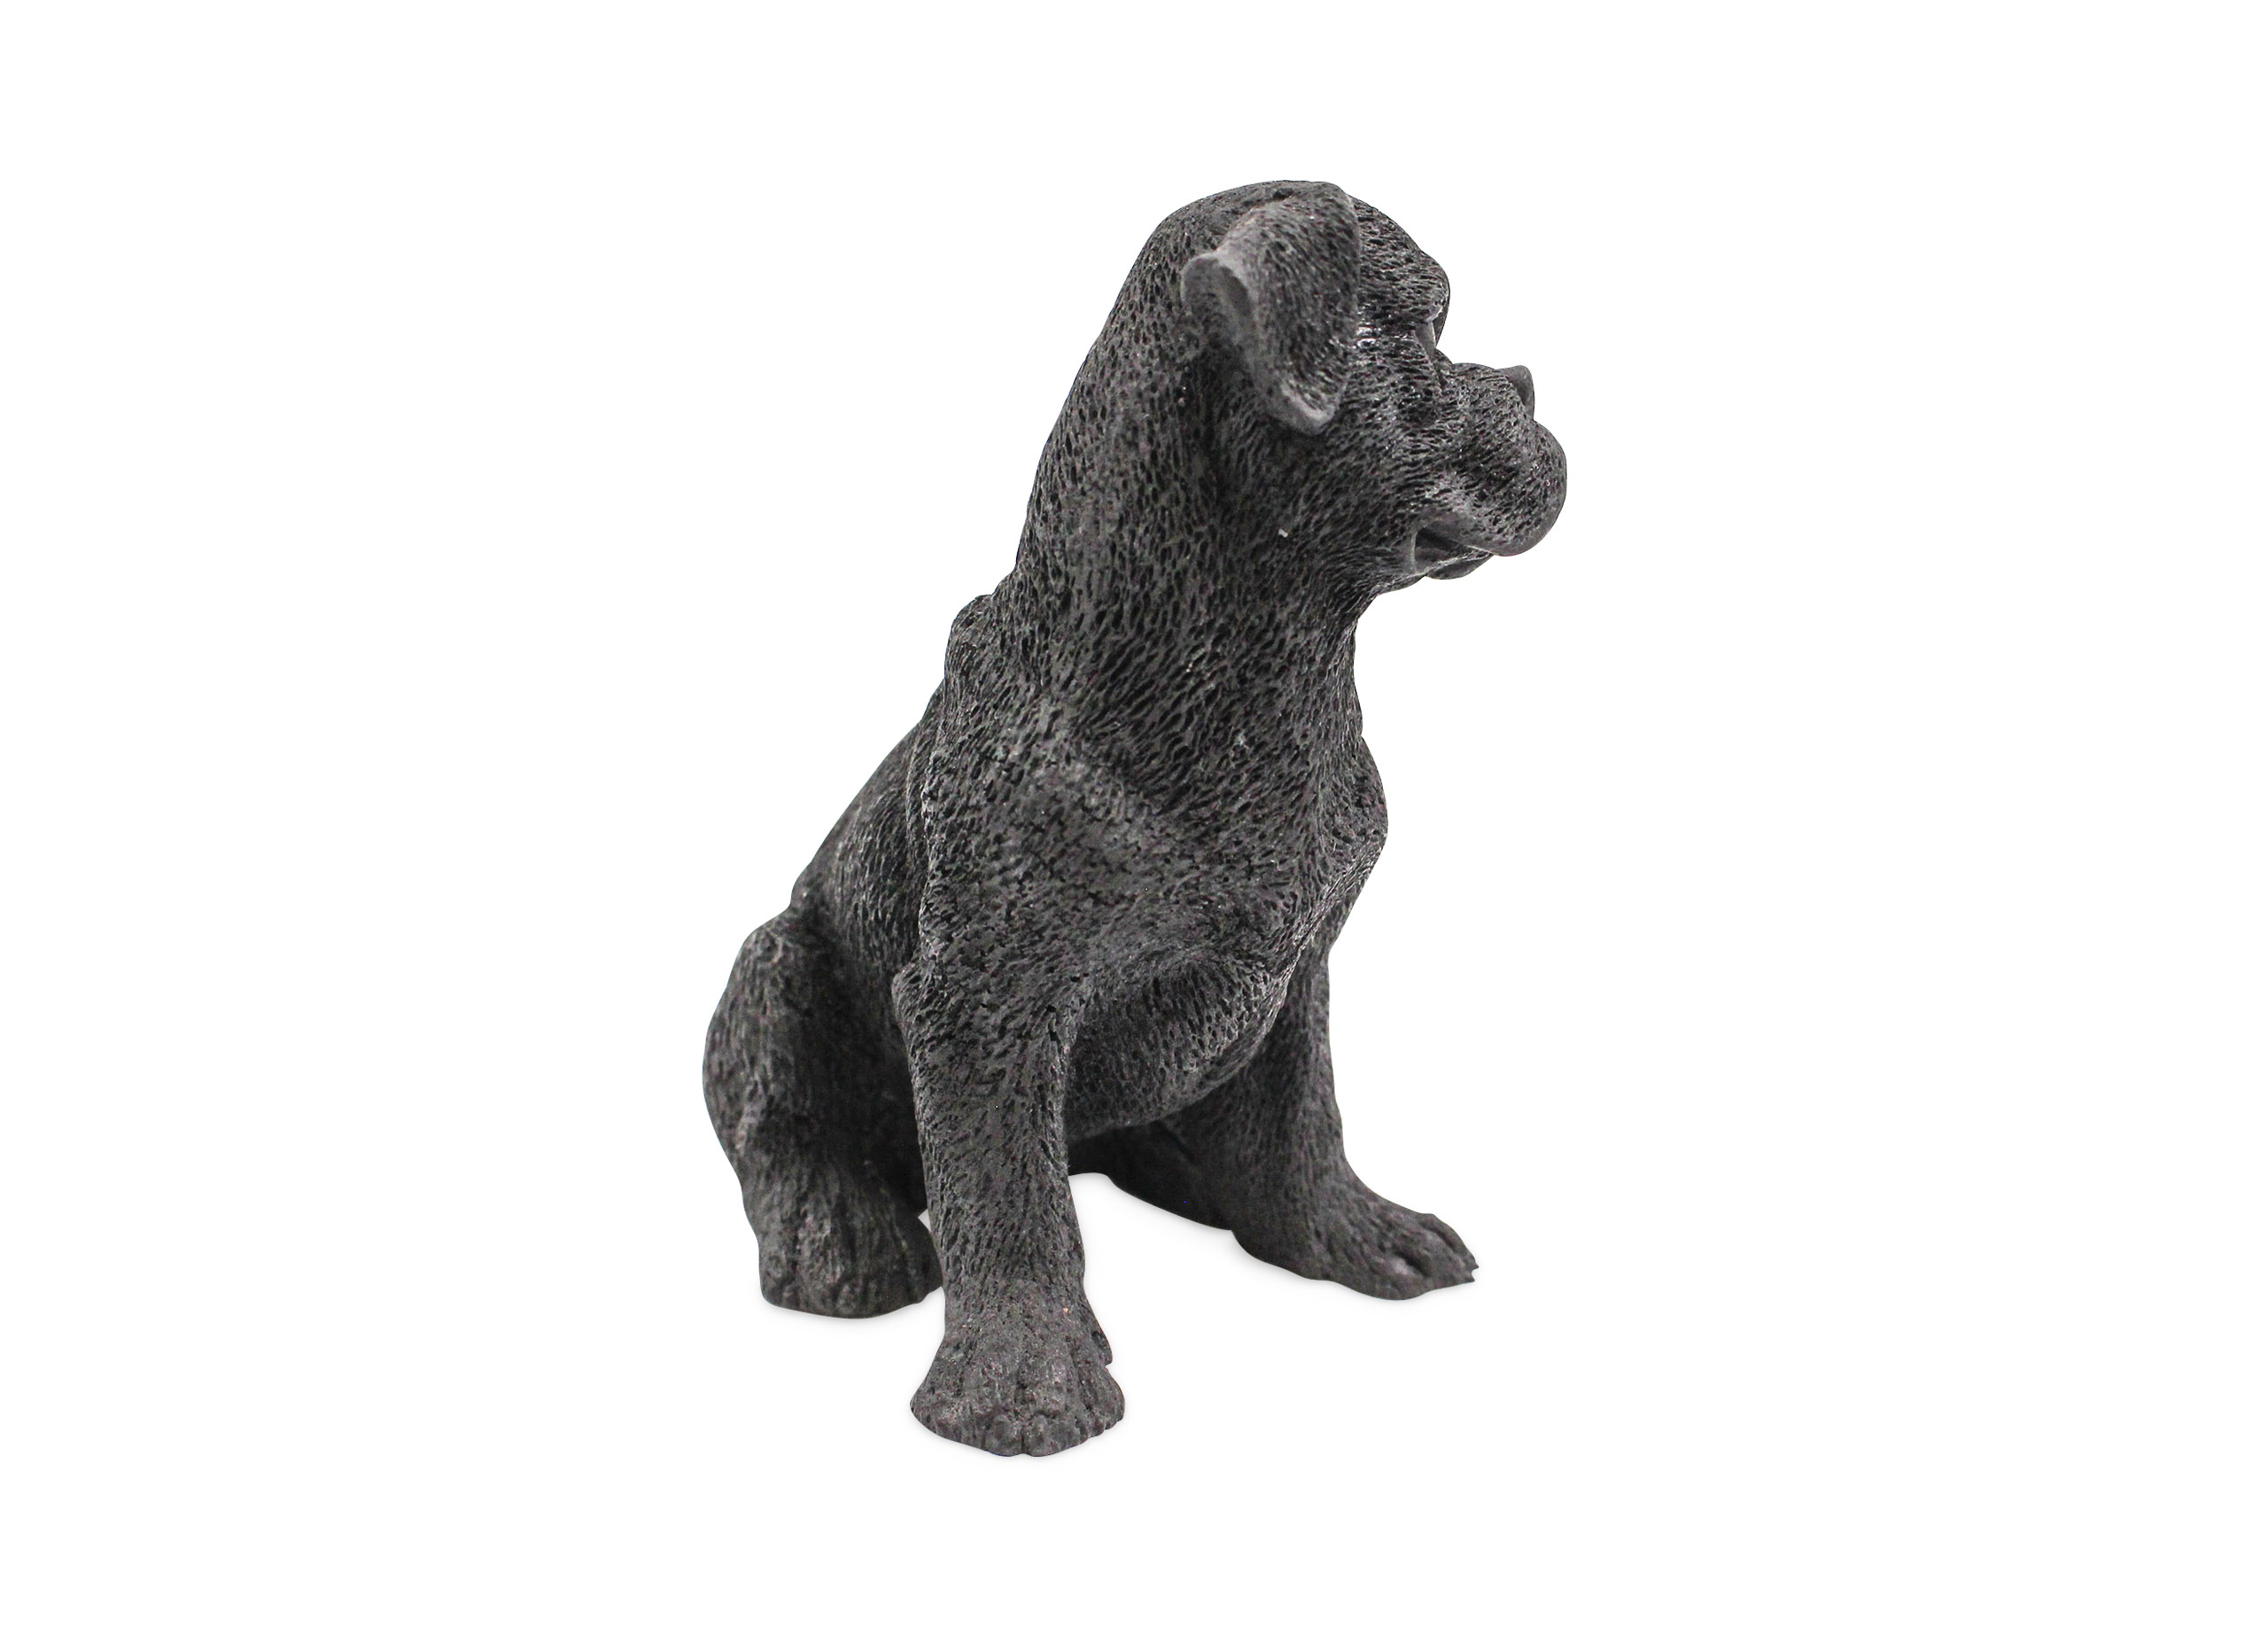 Shungite Dog Boxer Figurine - Crystal Dreams